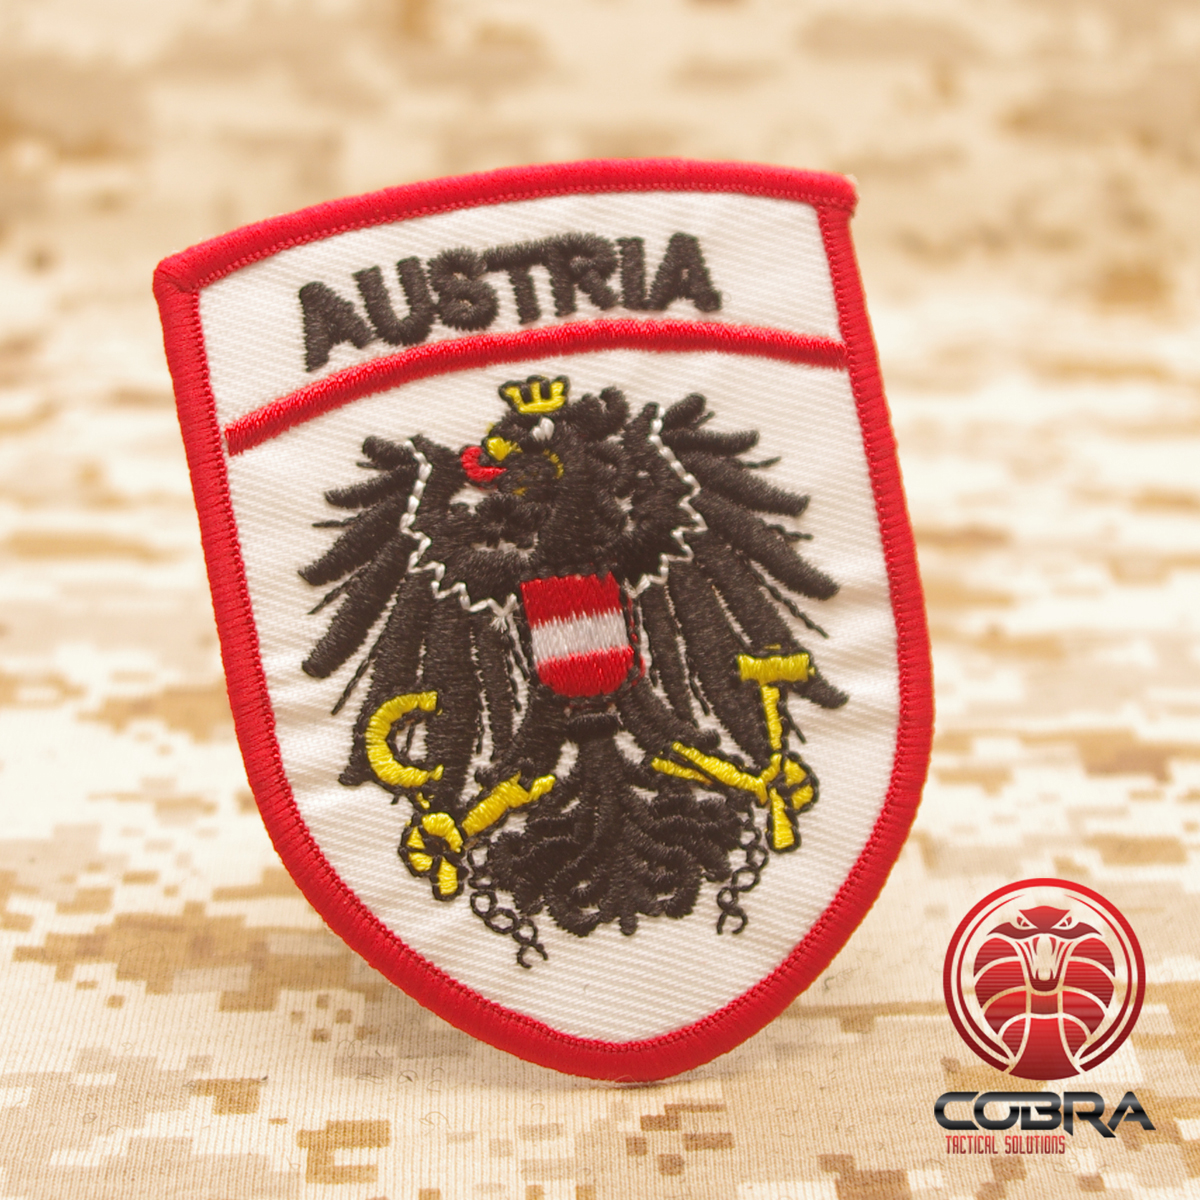 Austria was Brazil's main gun supplier, selling 85,800 items.